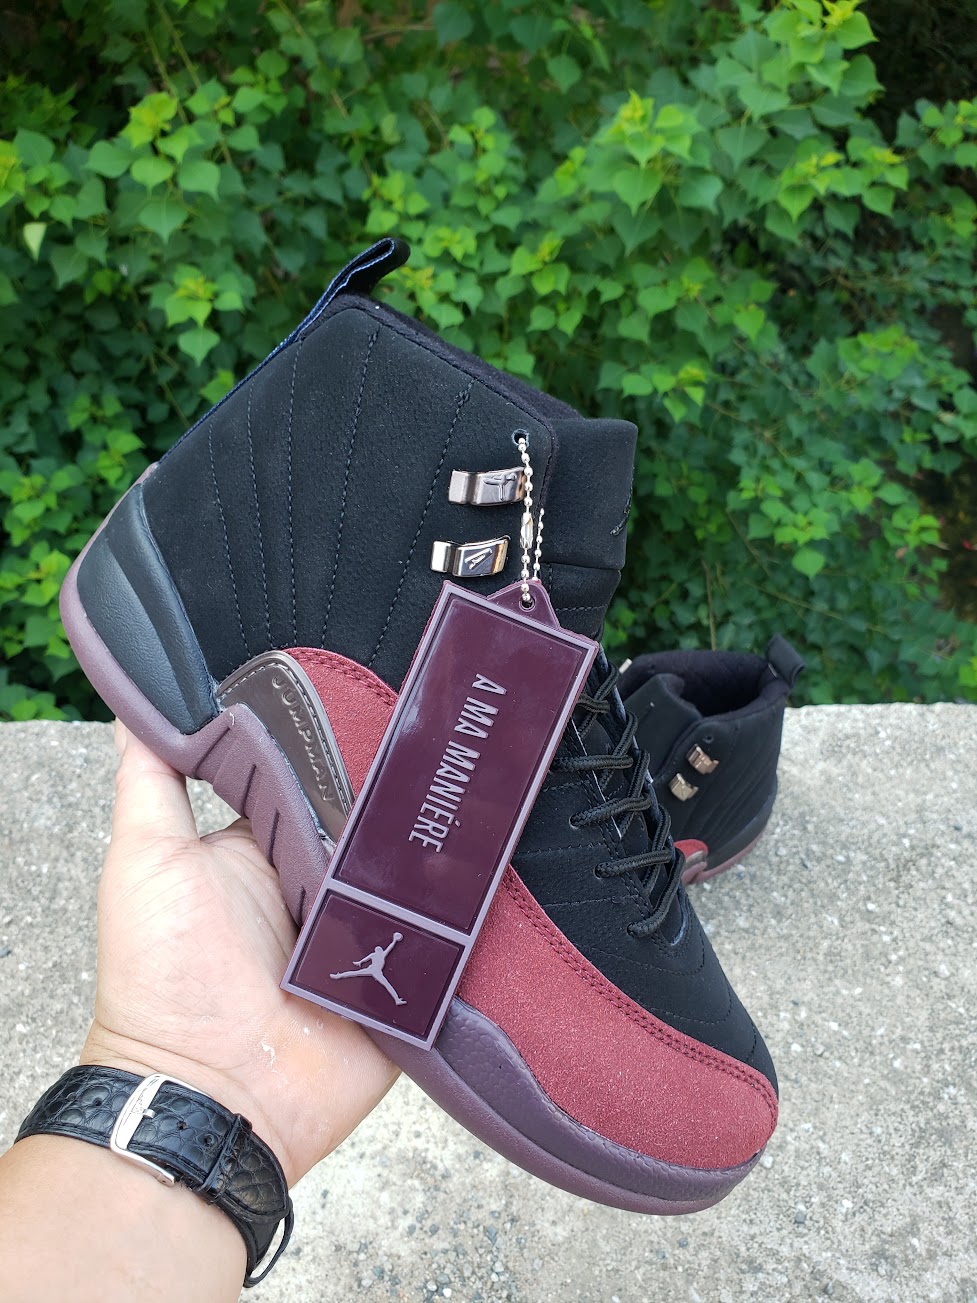 Jordan Retro 12 Sneaker Unisex in 263206, cheap Jordan12, only $69!